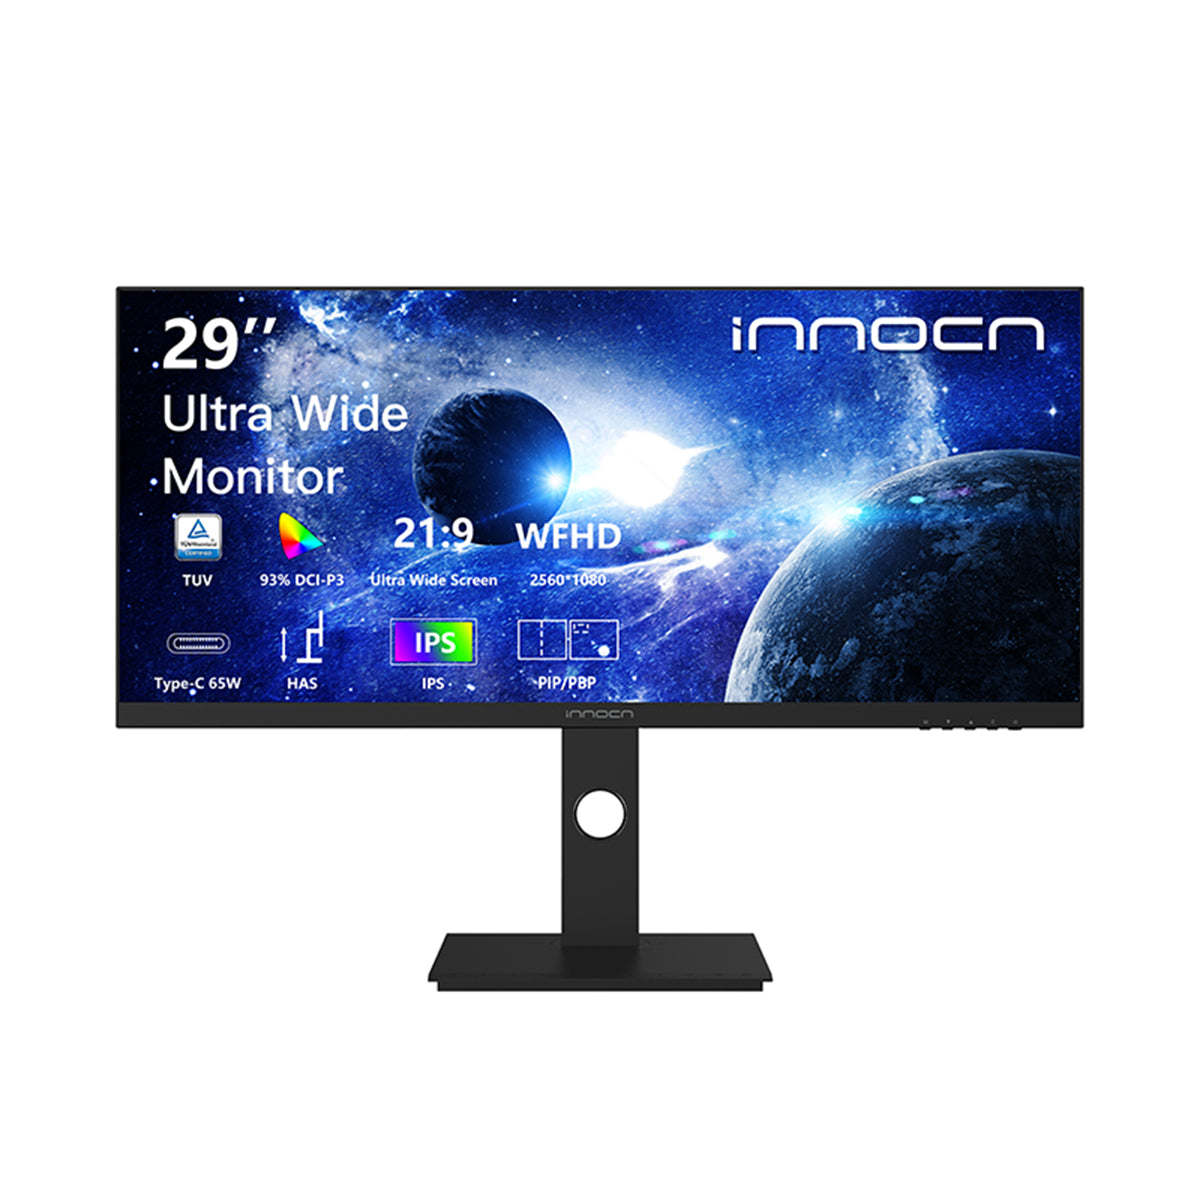 Innocn  26インチワイドディスプレイ 26C1F-D 2560x1080